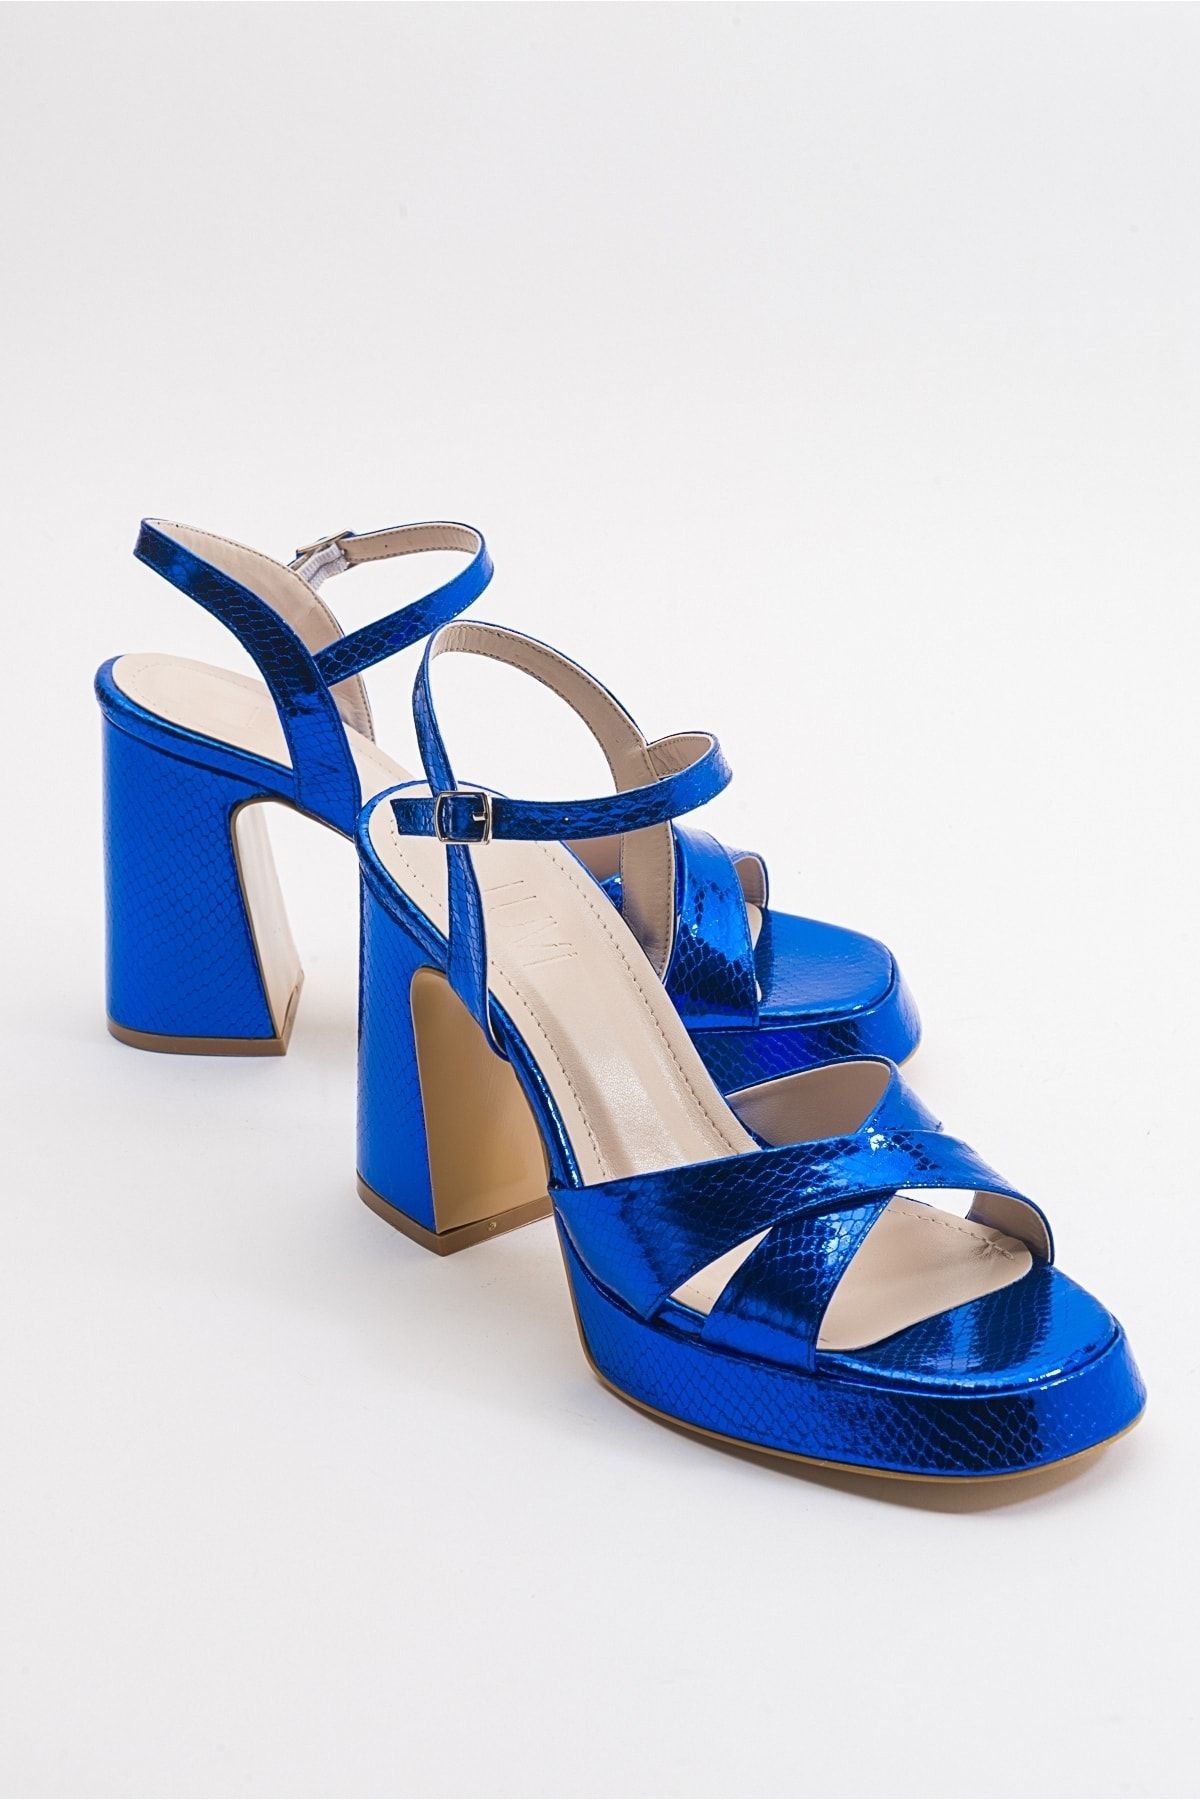 luvishoes Lello Sax Mavi Desenli Kadın Topuklu Ayakkabı